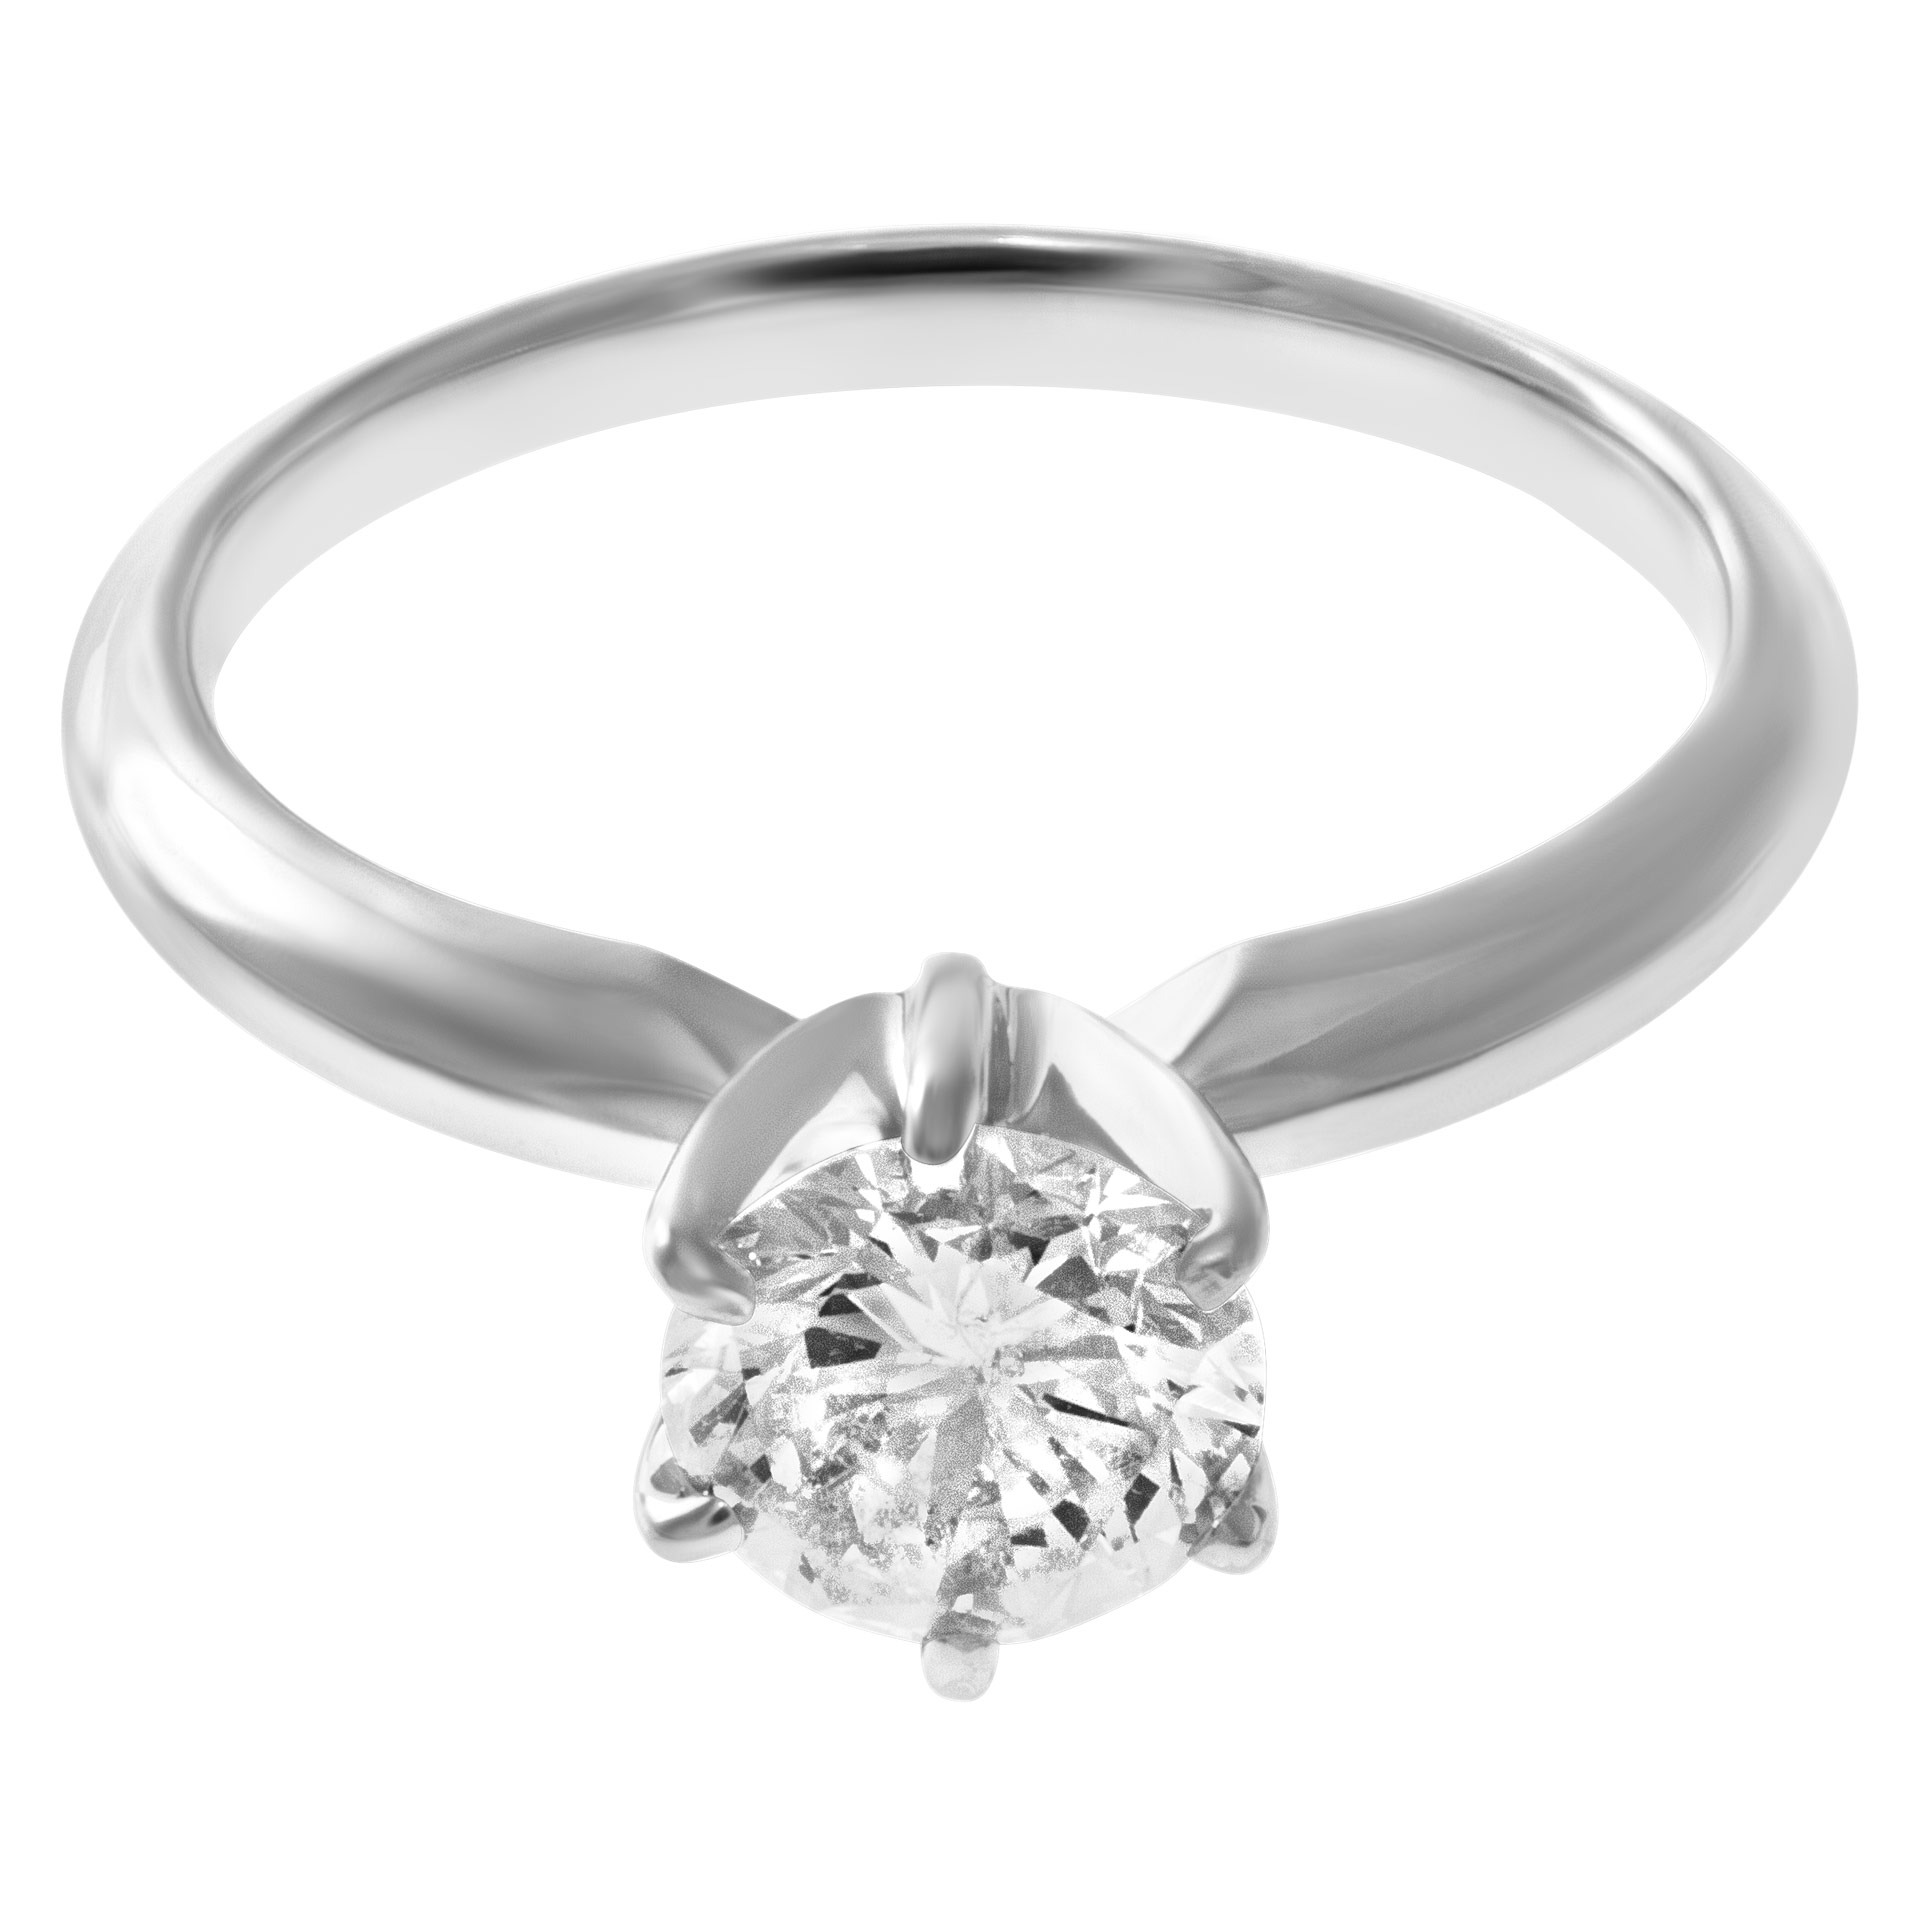 Gia certified round brilliant diamond 1.31 carat (F color, I1 clarity)